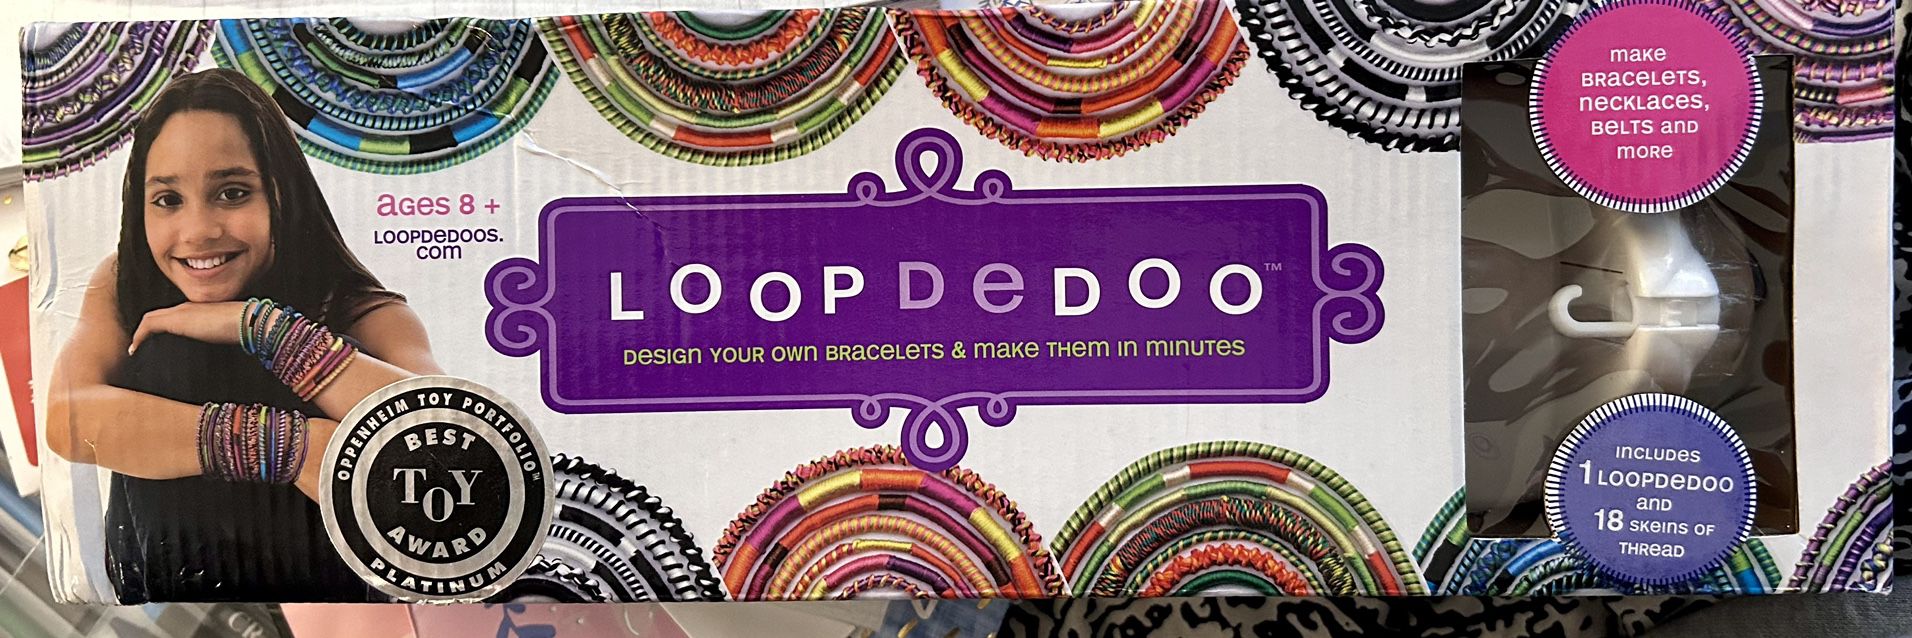 LOOPDEDOO Spining Loom Kit